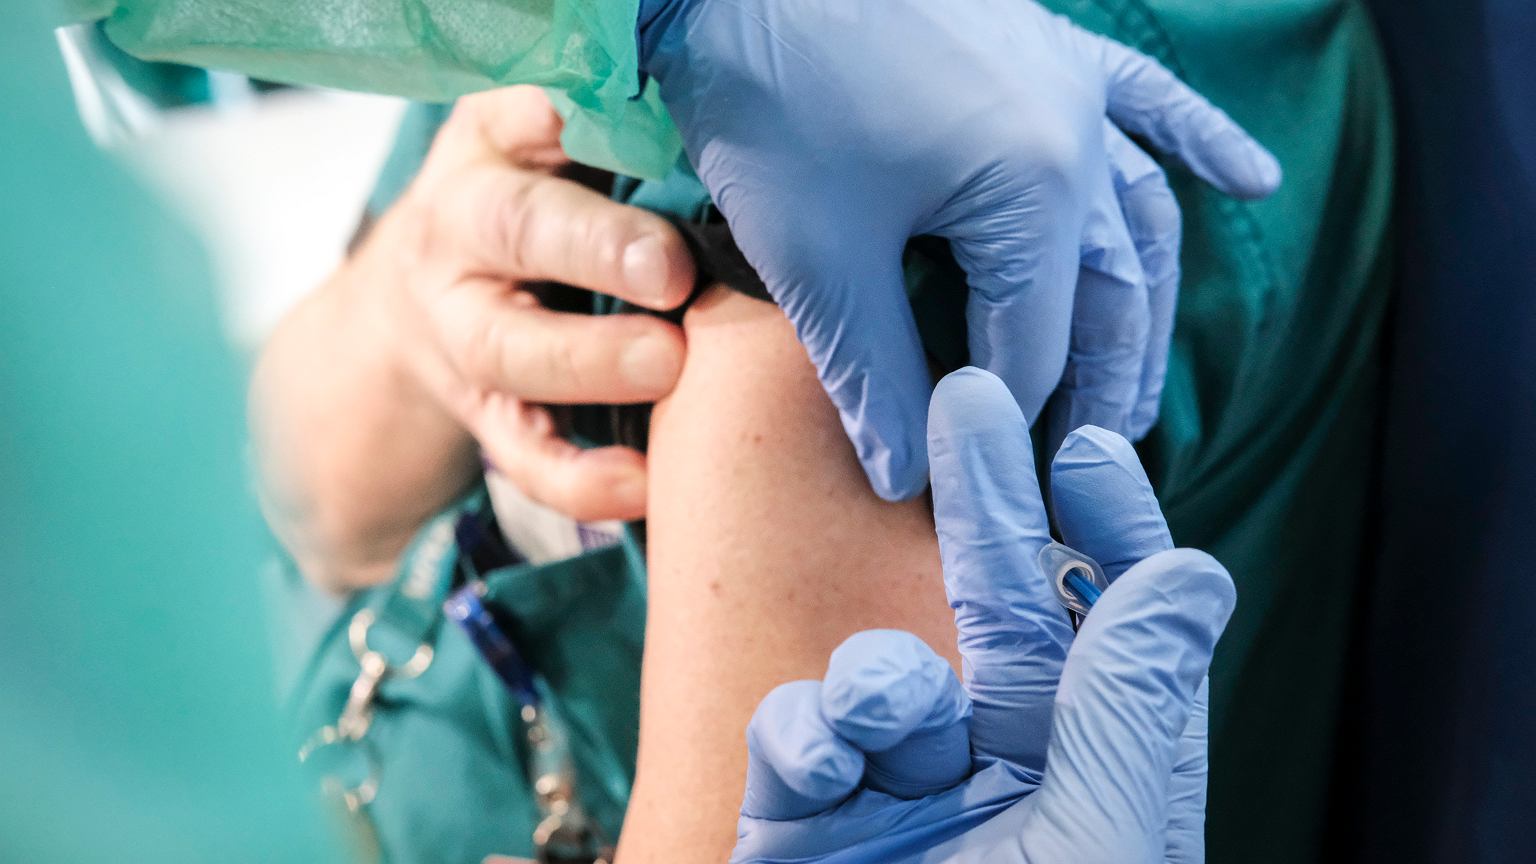 Should COVID-19 vaccinations be mandatory?  Poles split [SONDA]